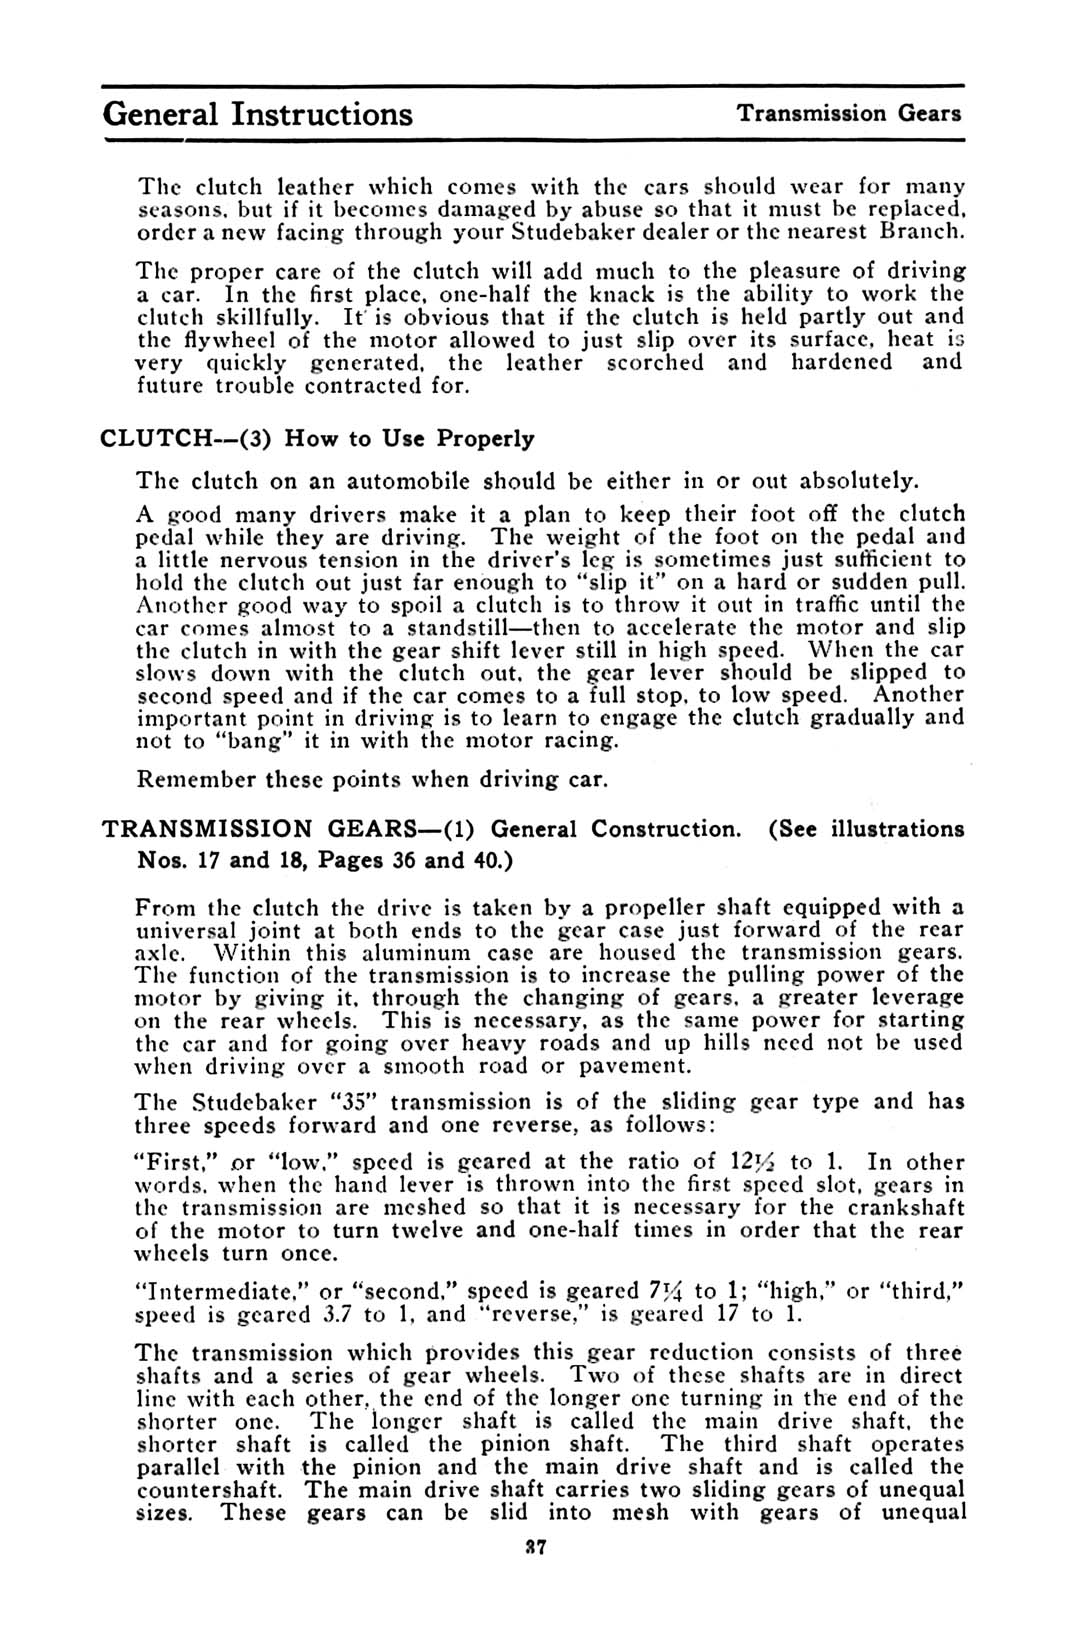 1913_Studebaker_Model_35_Manual-37